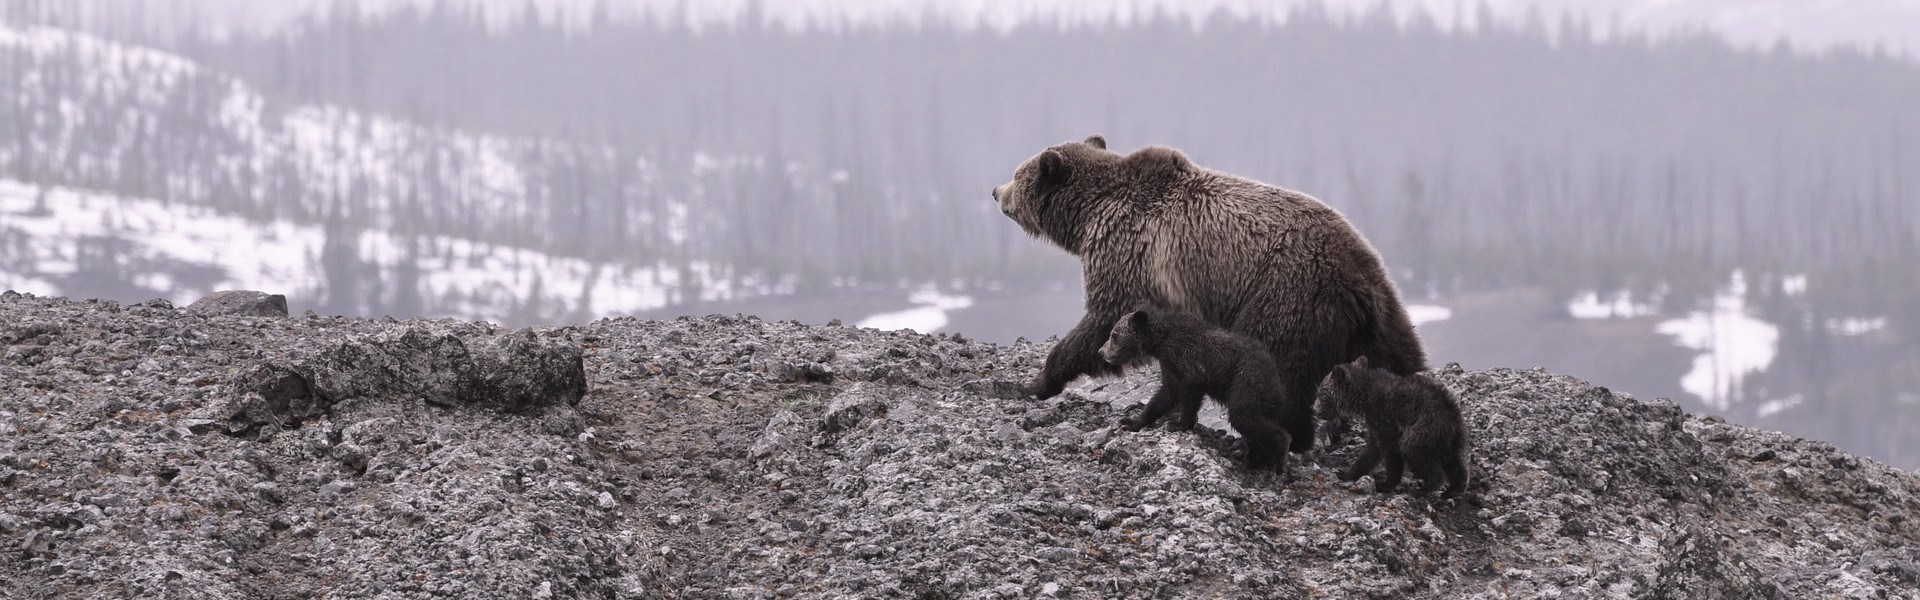 Bears_in_arctic_forrest.jpg